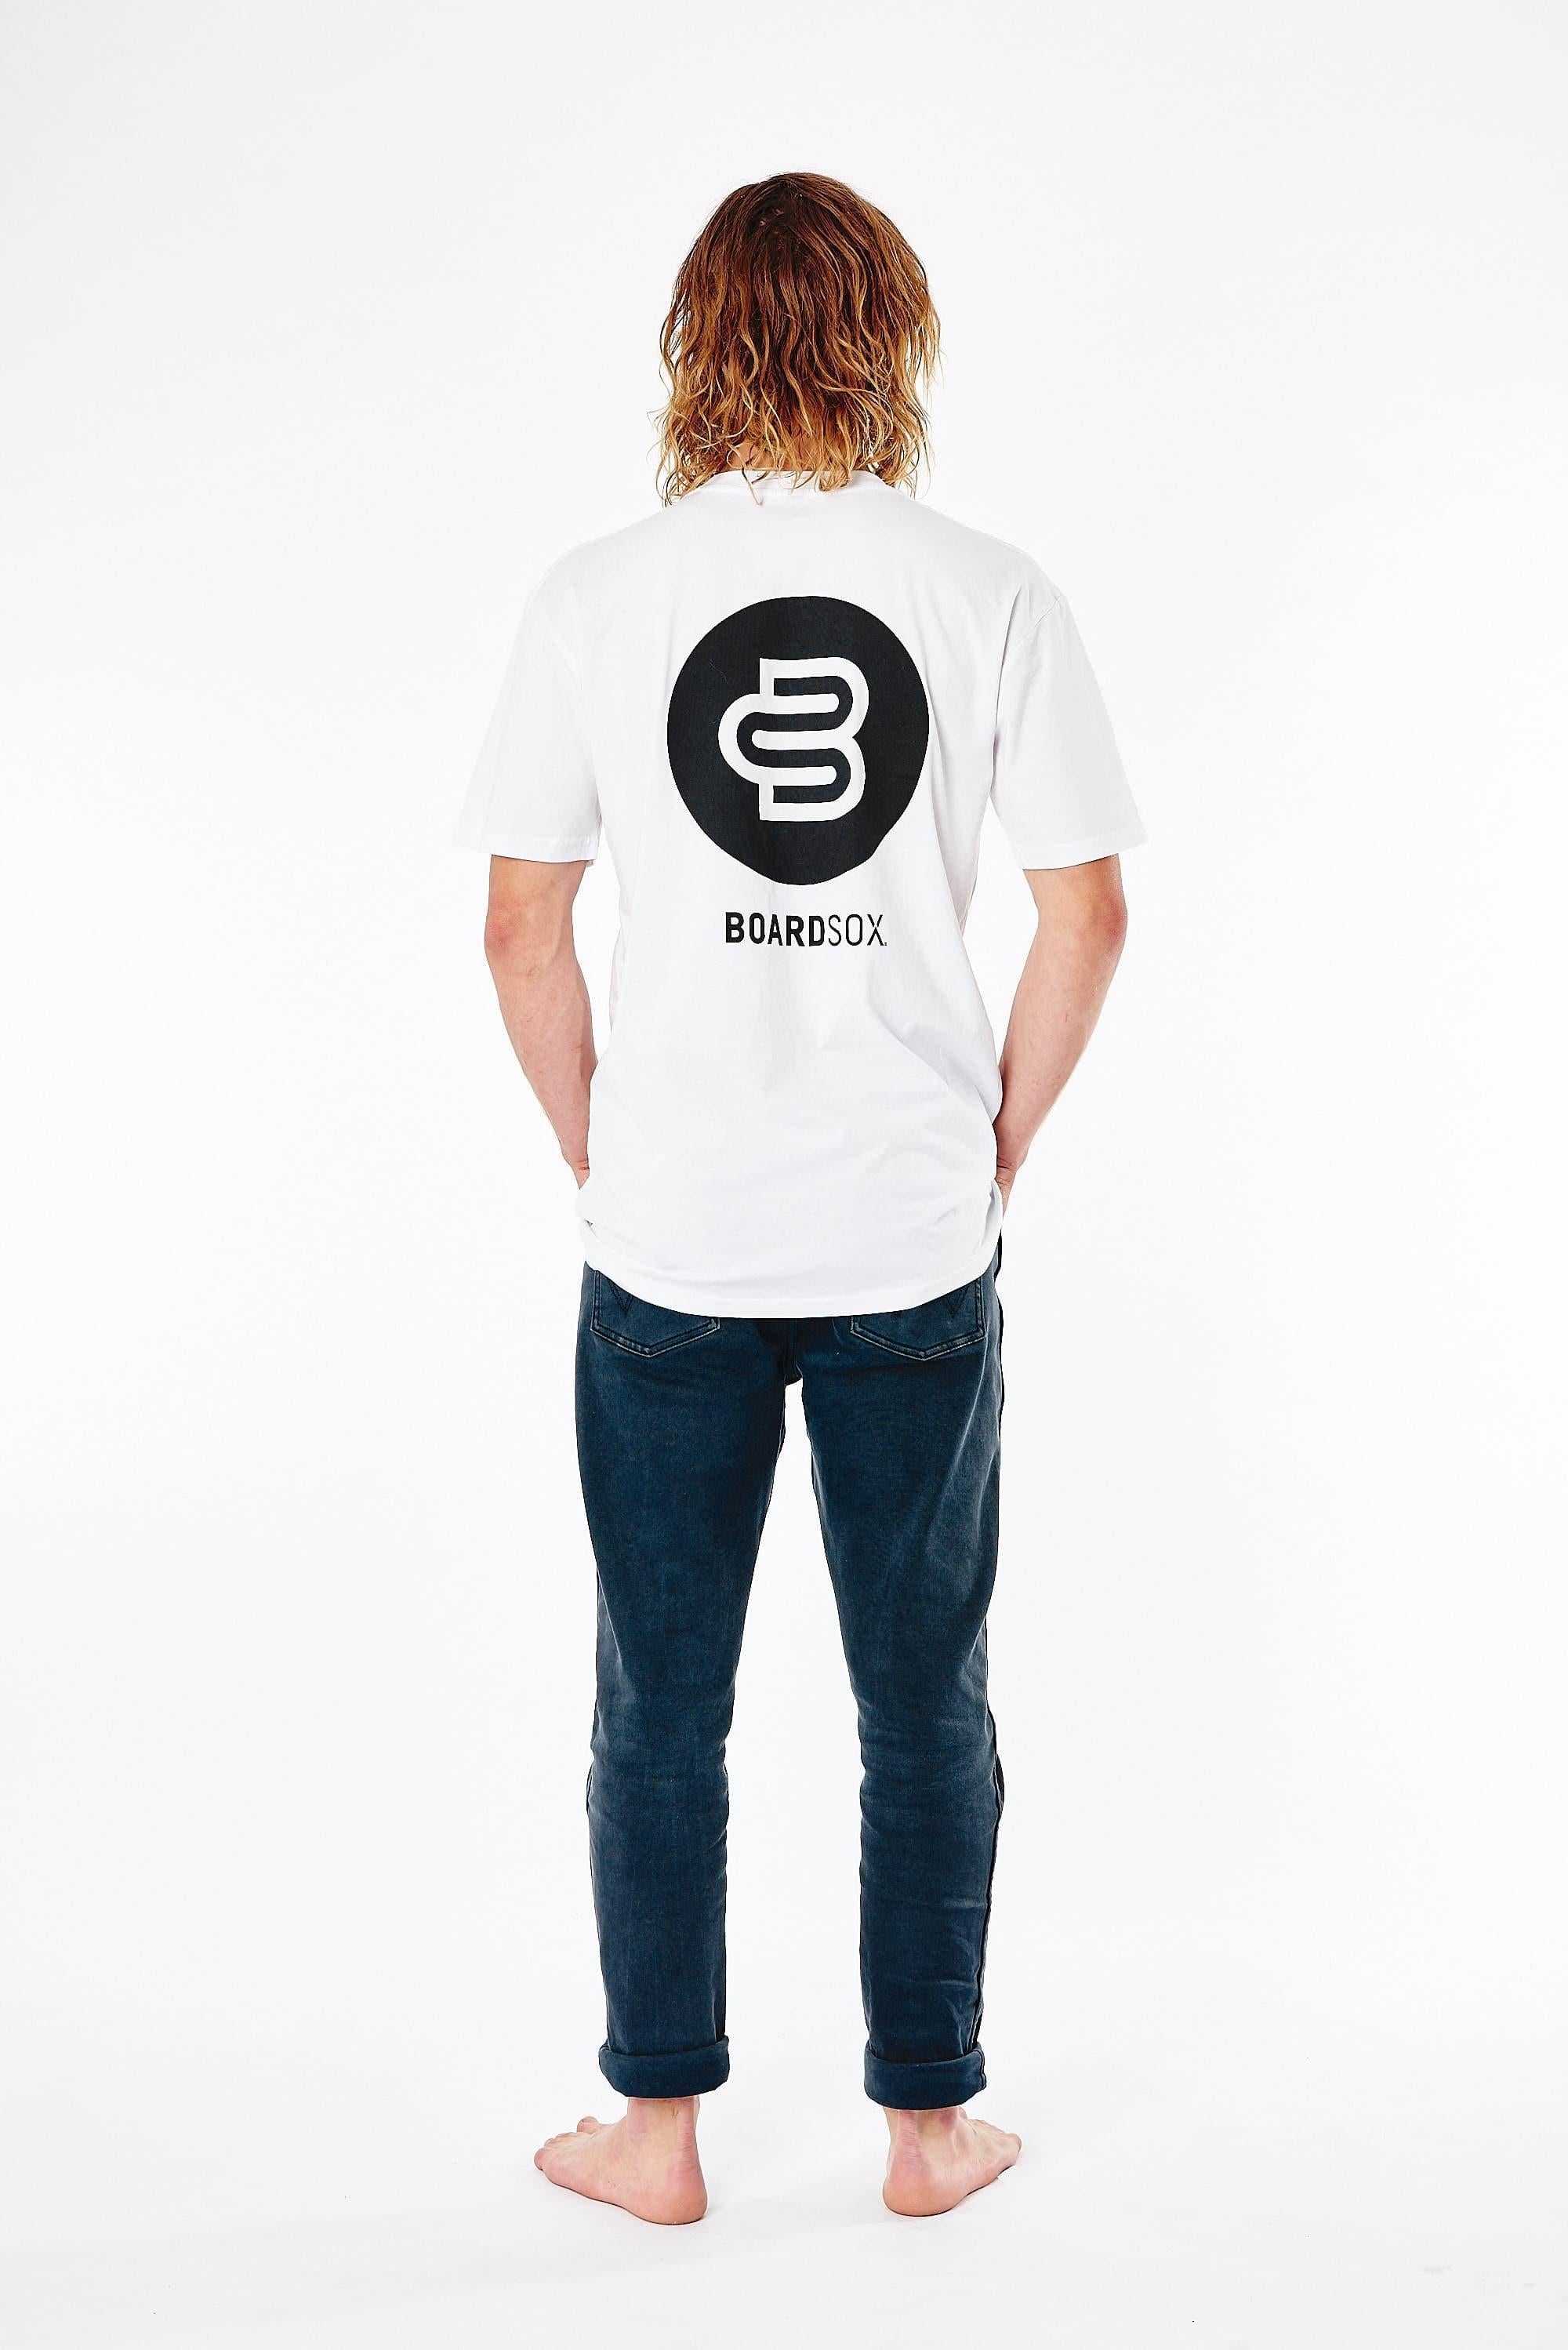 Boardsox® Mens White T-Shirt - BOARDSOX® AustraliaT-Shirt